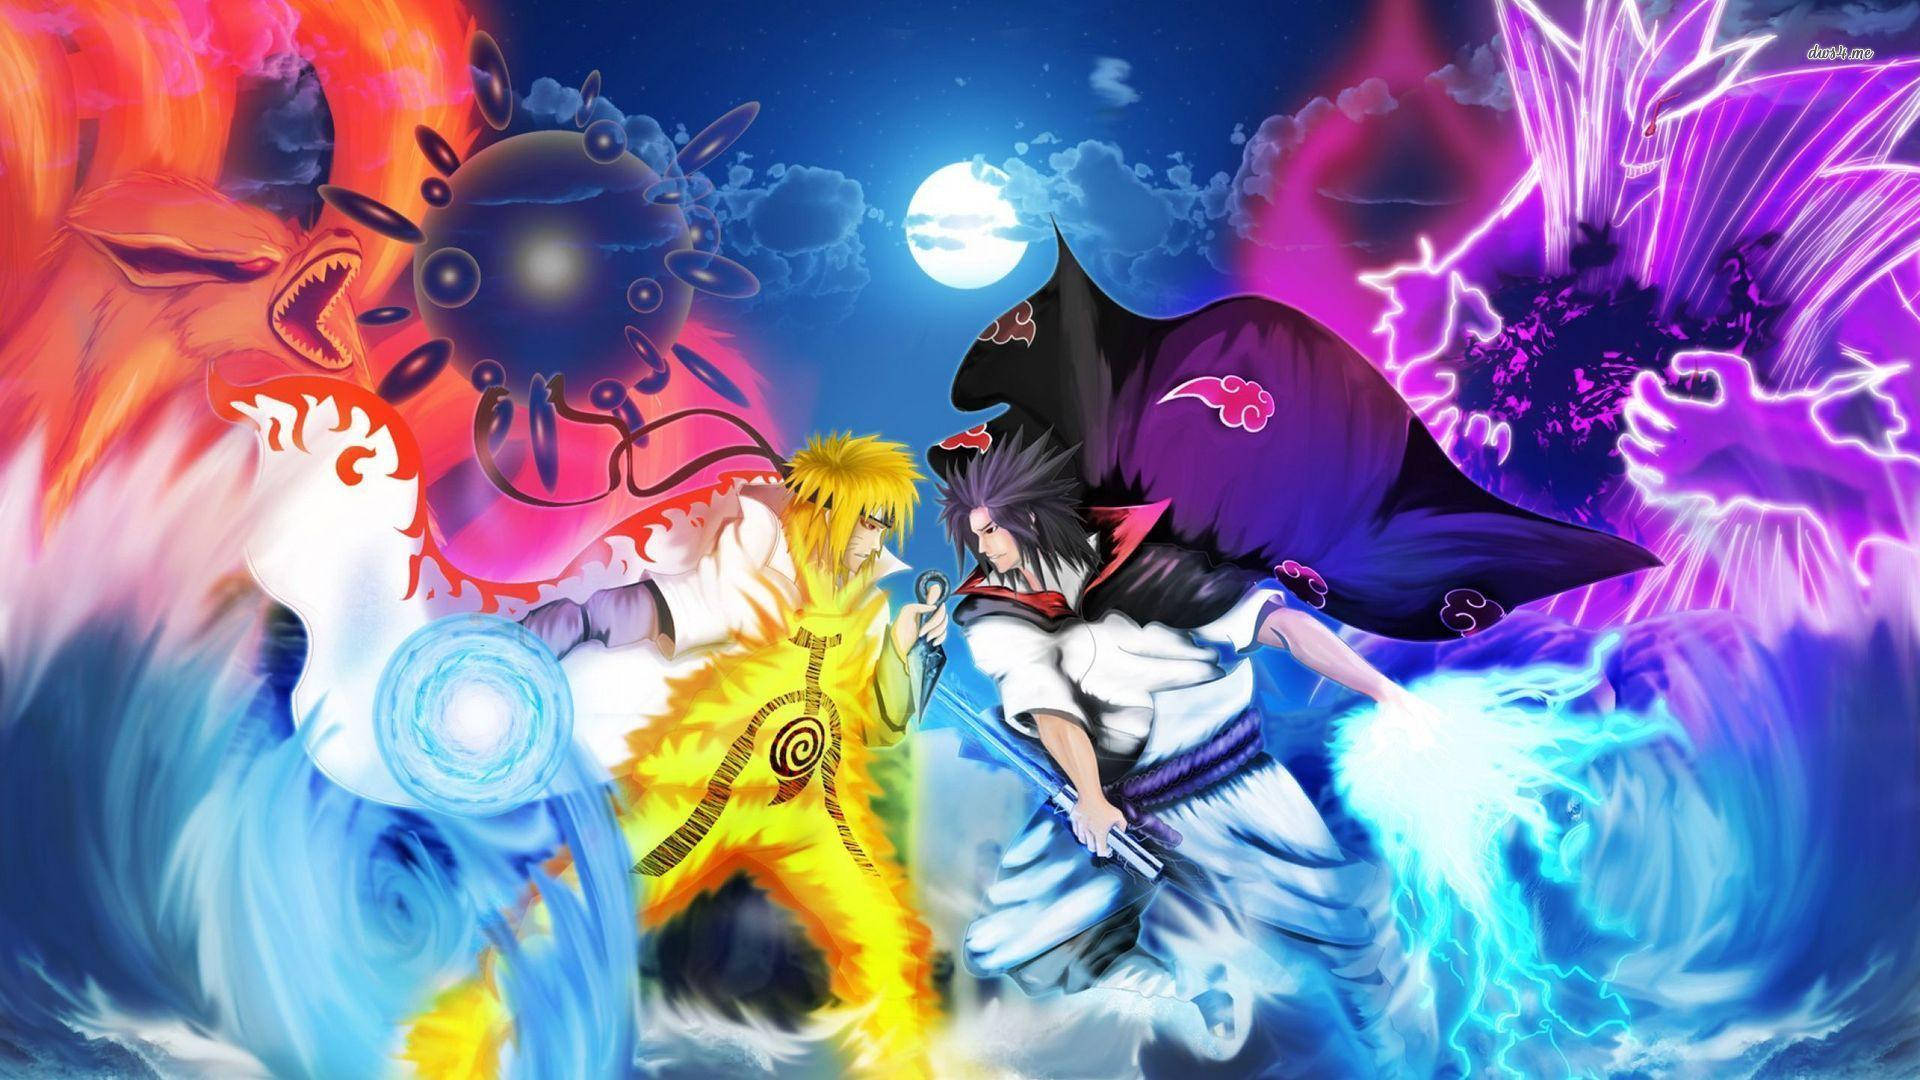 Anime Naruto Chidori Sasuke Uchiha HD Wall Decorative Poster